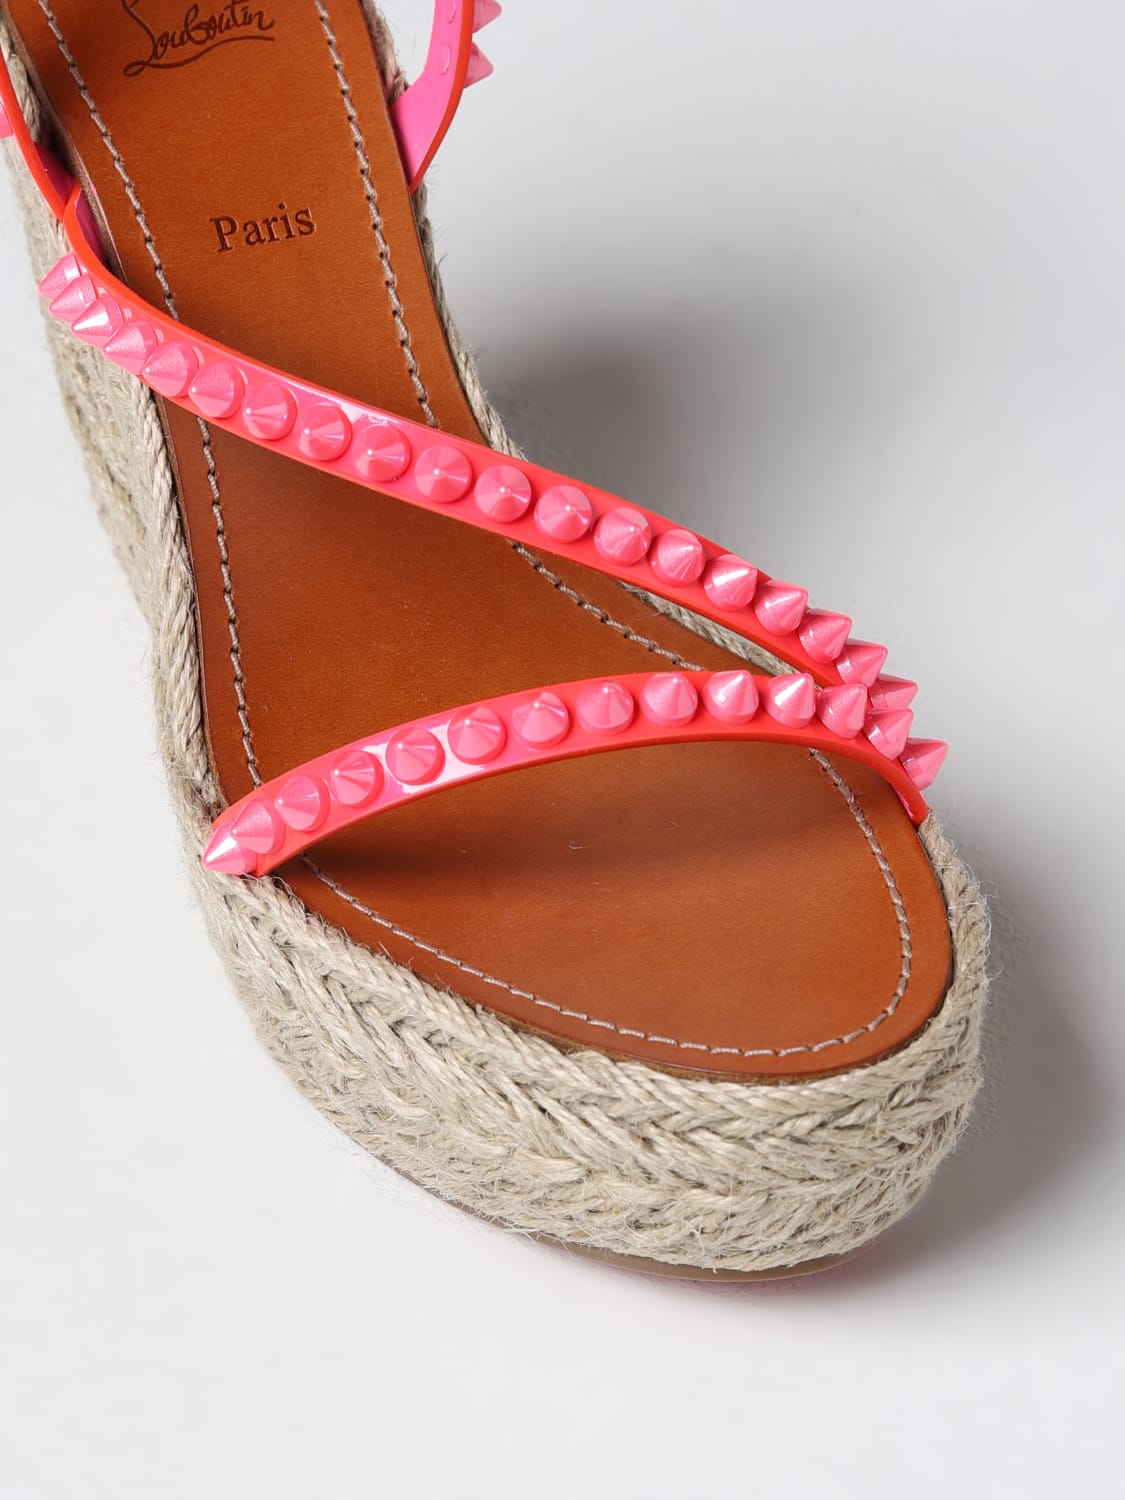 CHRISTIAN LOUBOUTIN: Mafaldina wedge sandal in patent leather studs - Fuchsia | Christian Louboutin wedge shoes 1230846 online at GIGLIO.COM